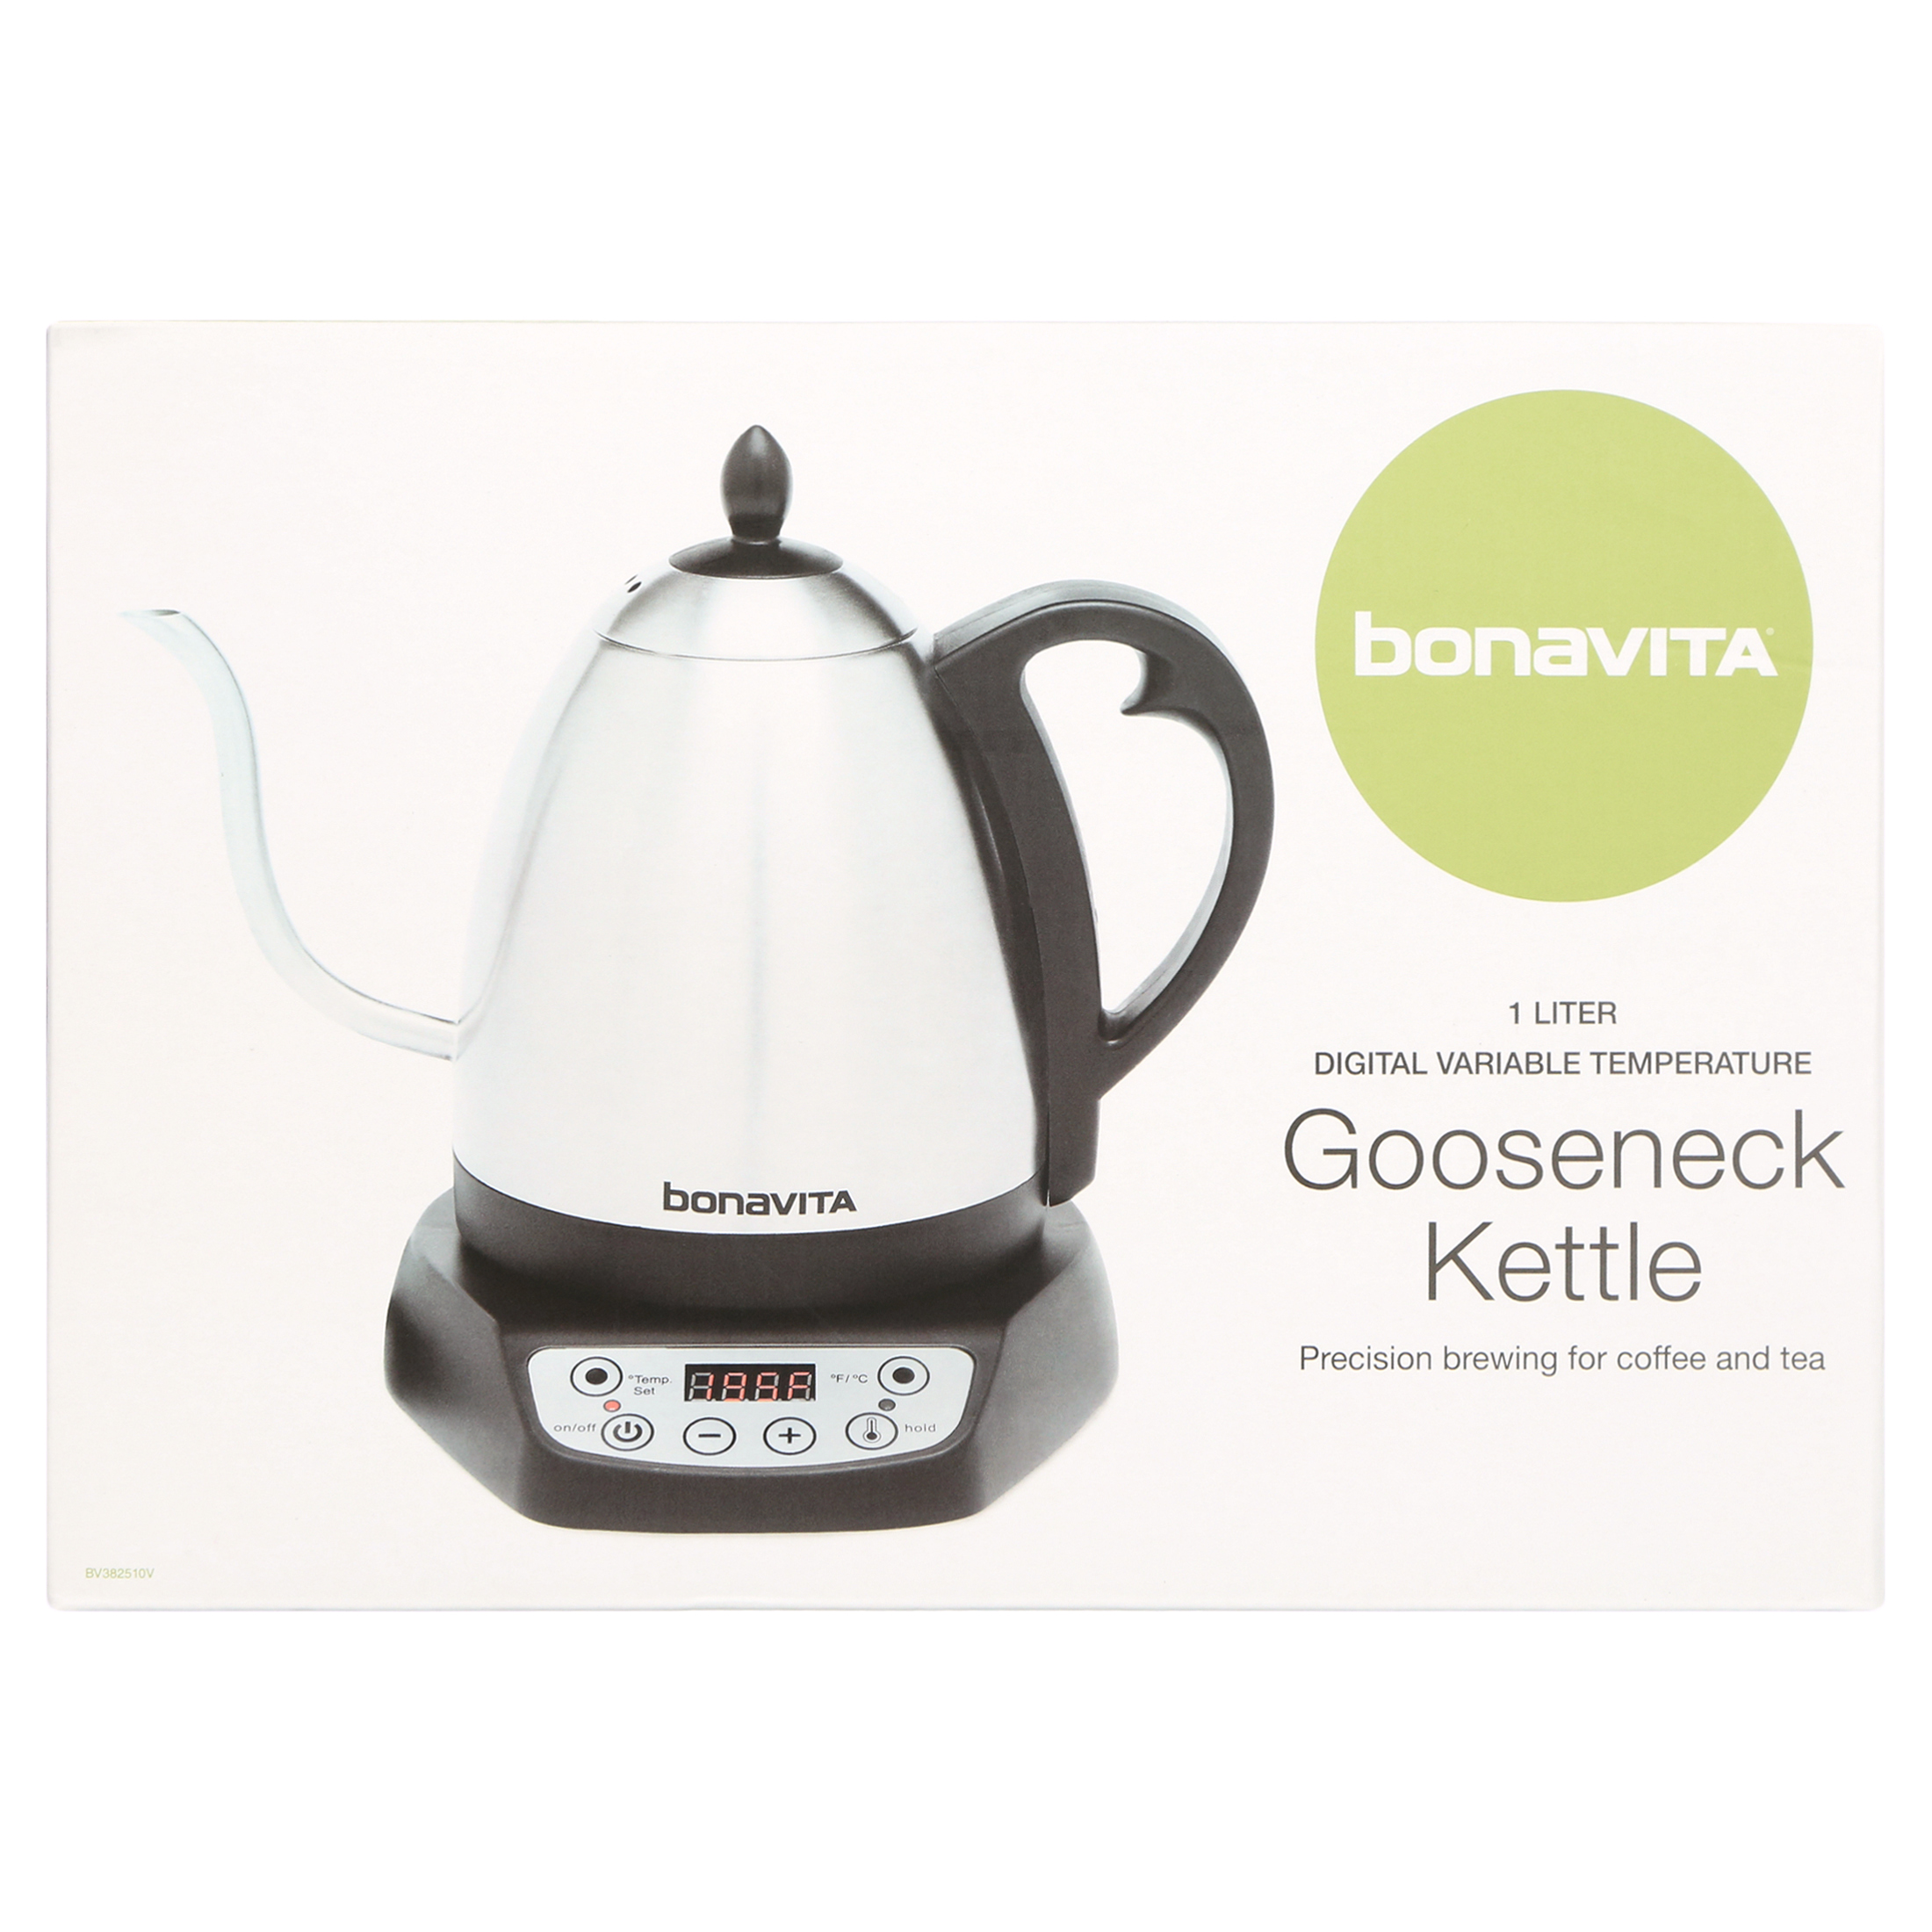 Bonavita Goosenecked Electric Tea Kettles